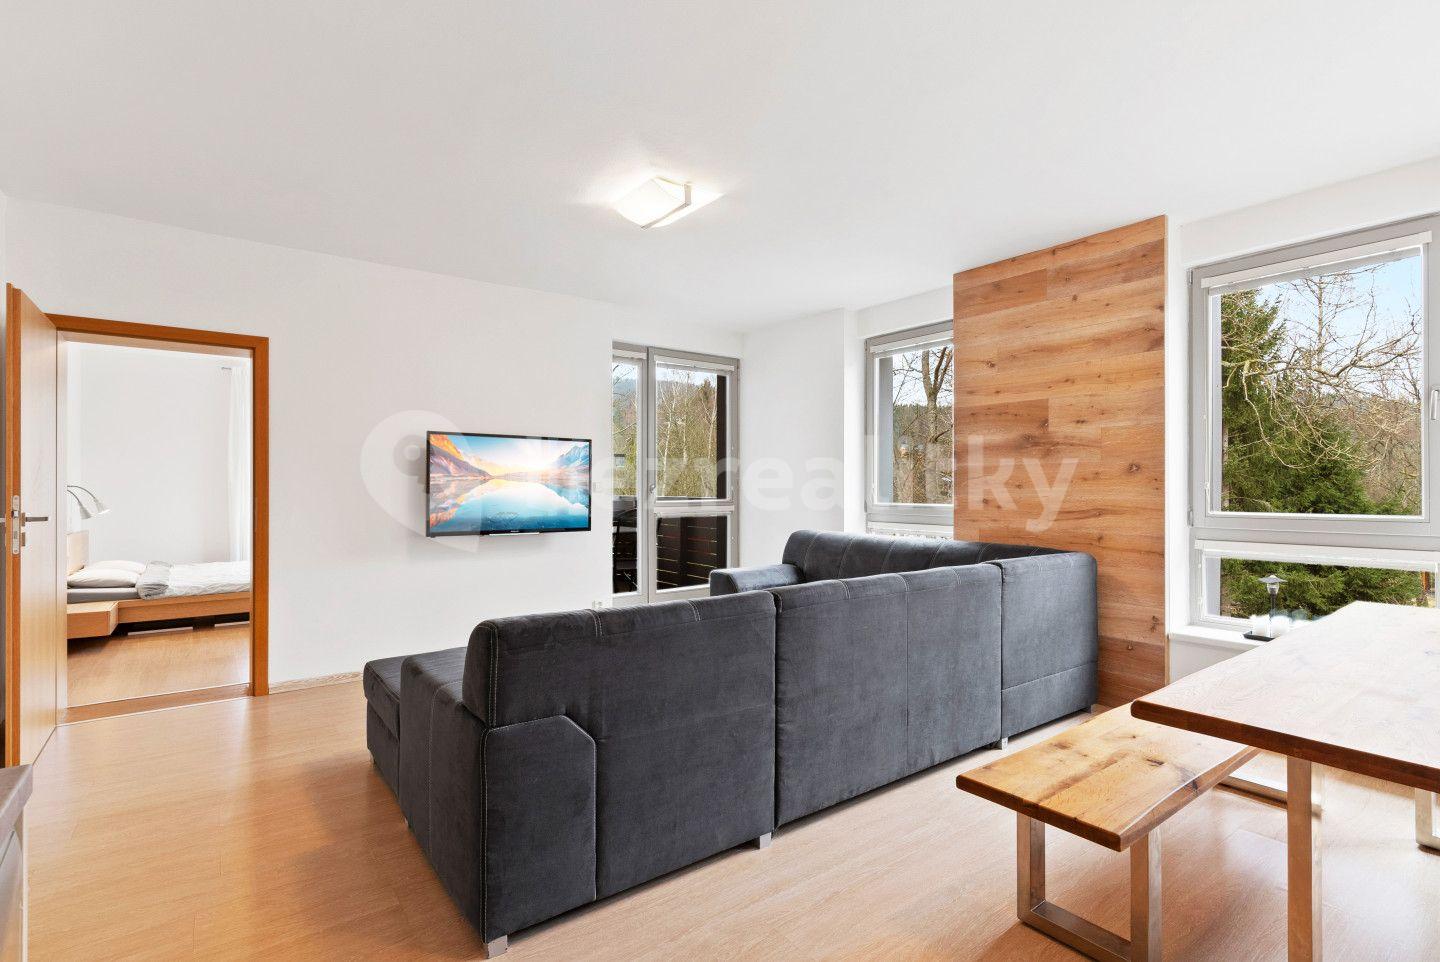 2 bedroom with open-plan kitchen flat for sale, 72 m², Harrachov, Liberecký Region